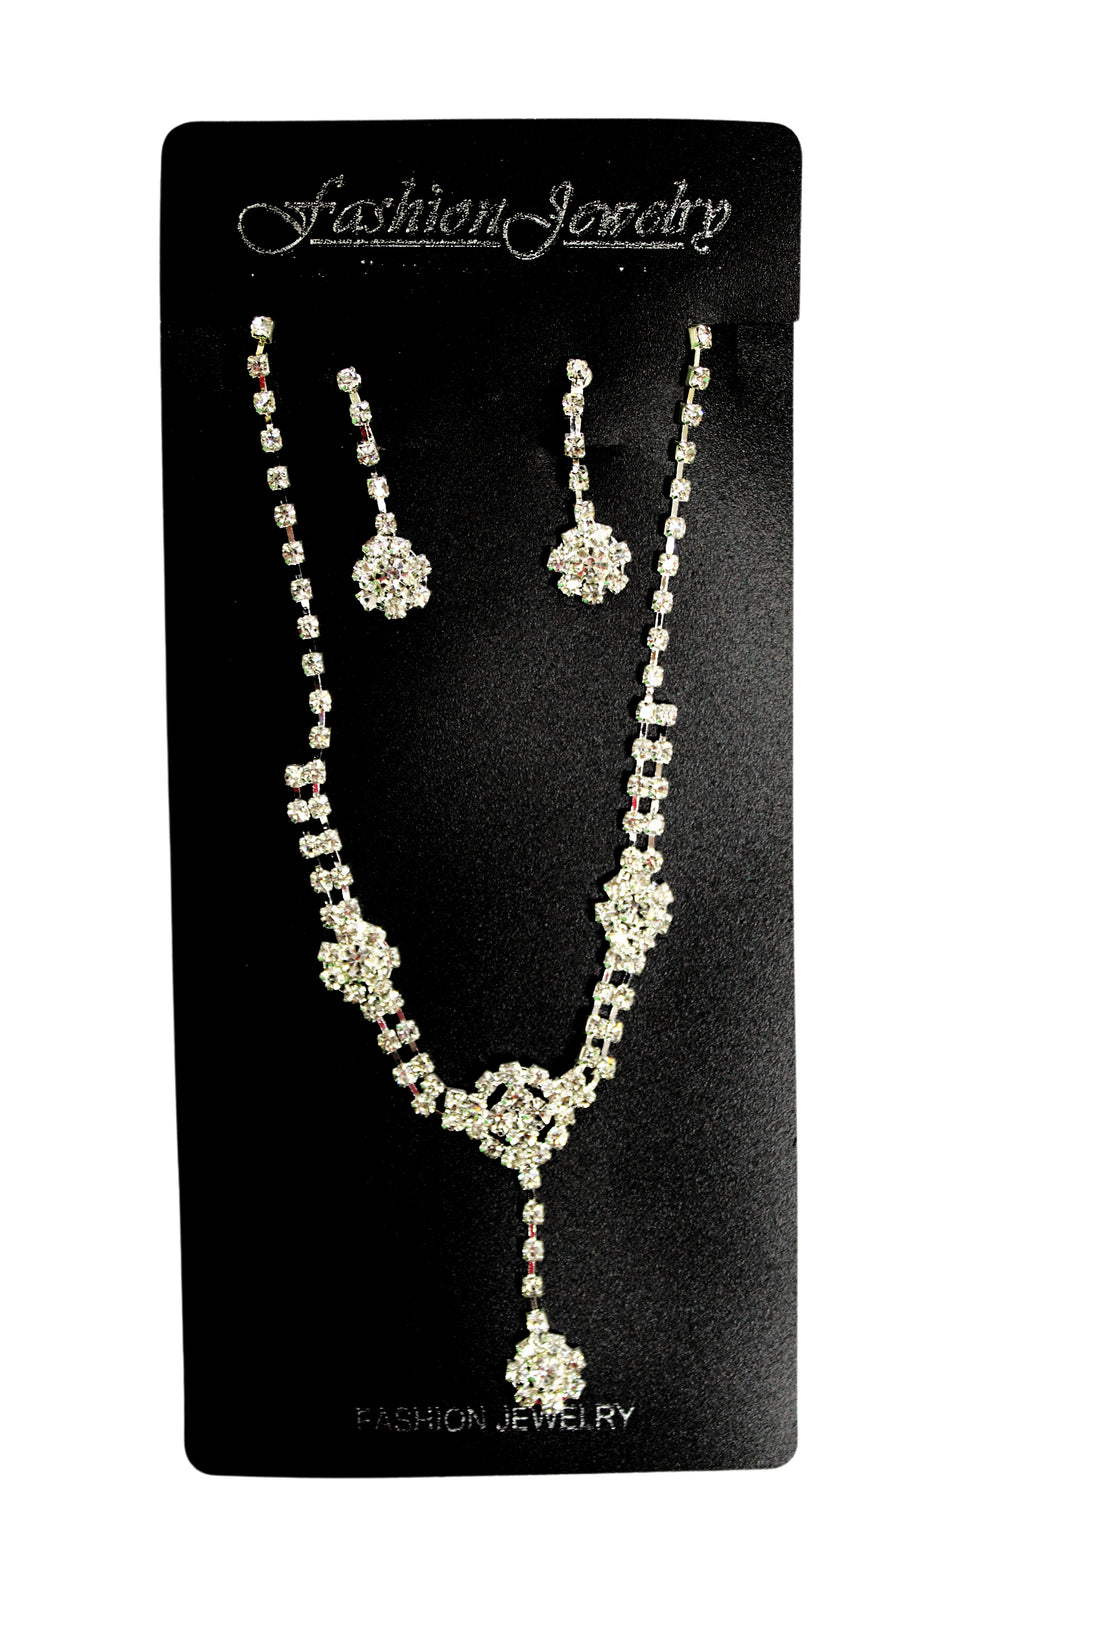 Swarovski Crystal Earring Necklace set TL3026 (Clip on)